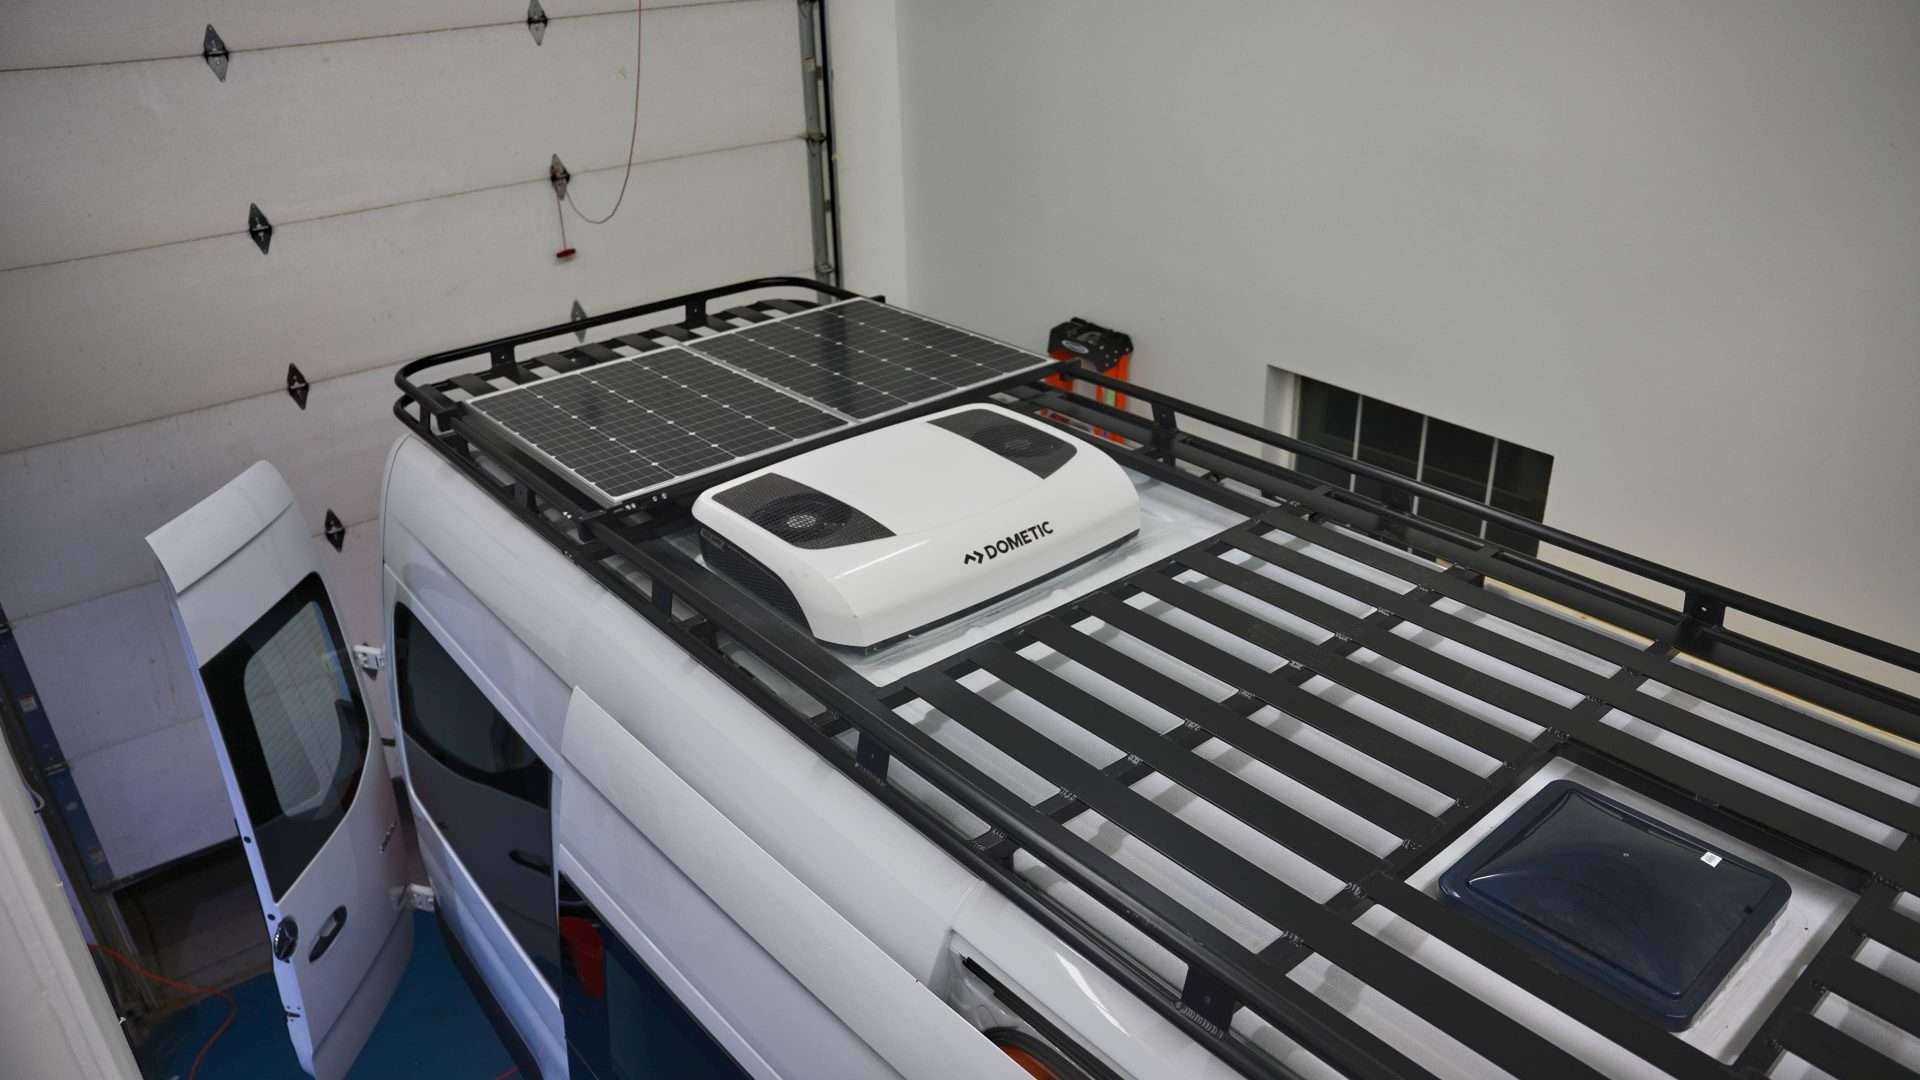 Camper van parked inside with solar panels on top.